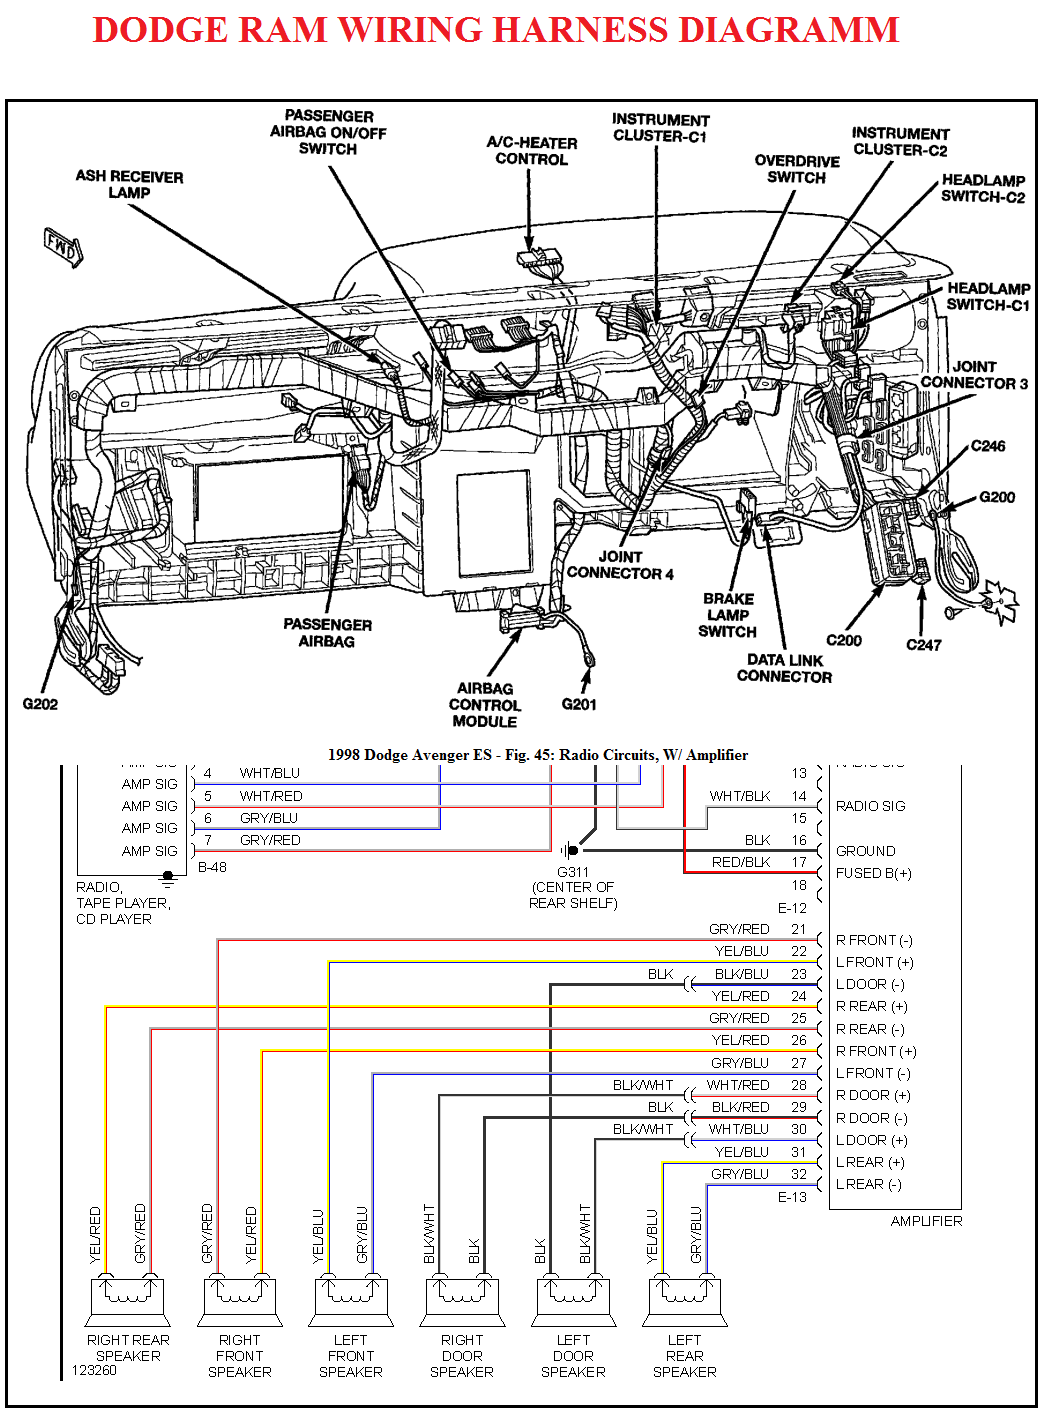 Dodge Ram Wiring Harness Diagram Car Construction - 2010 Dodge RAM Wiring Harness Diagram